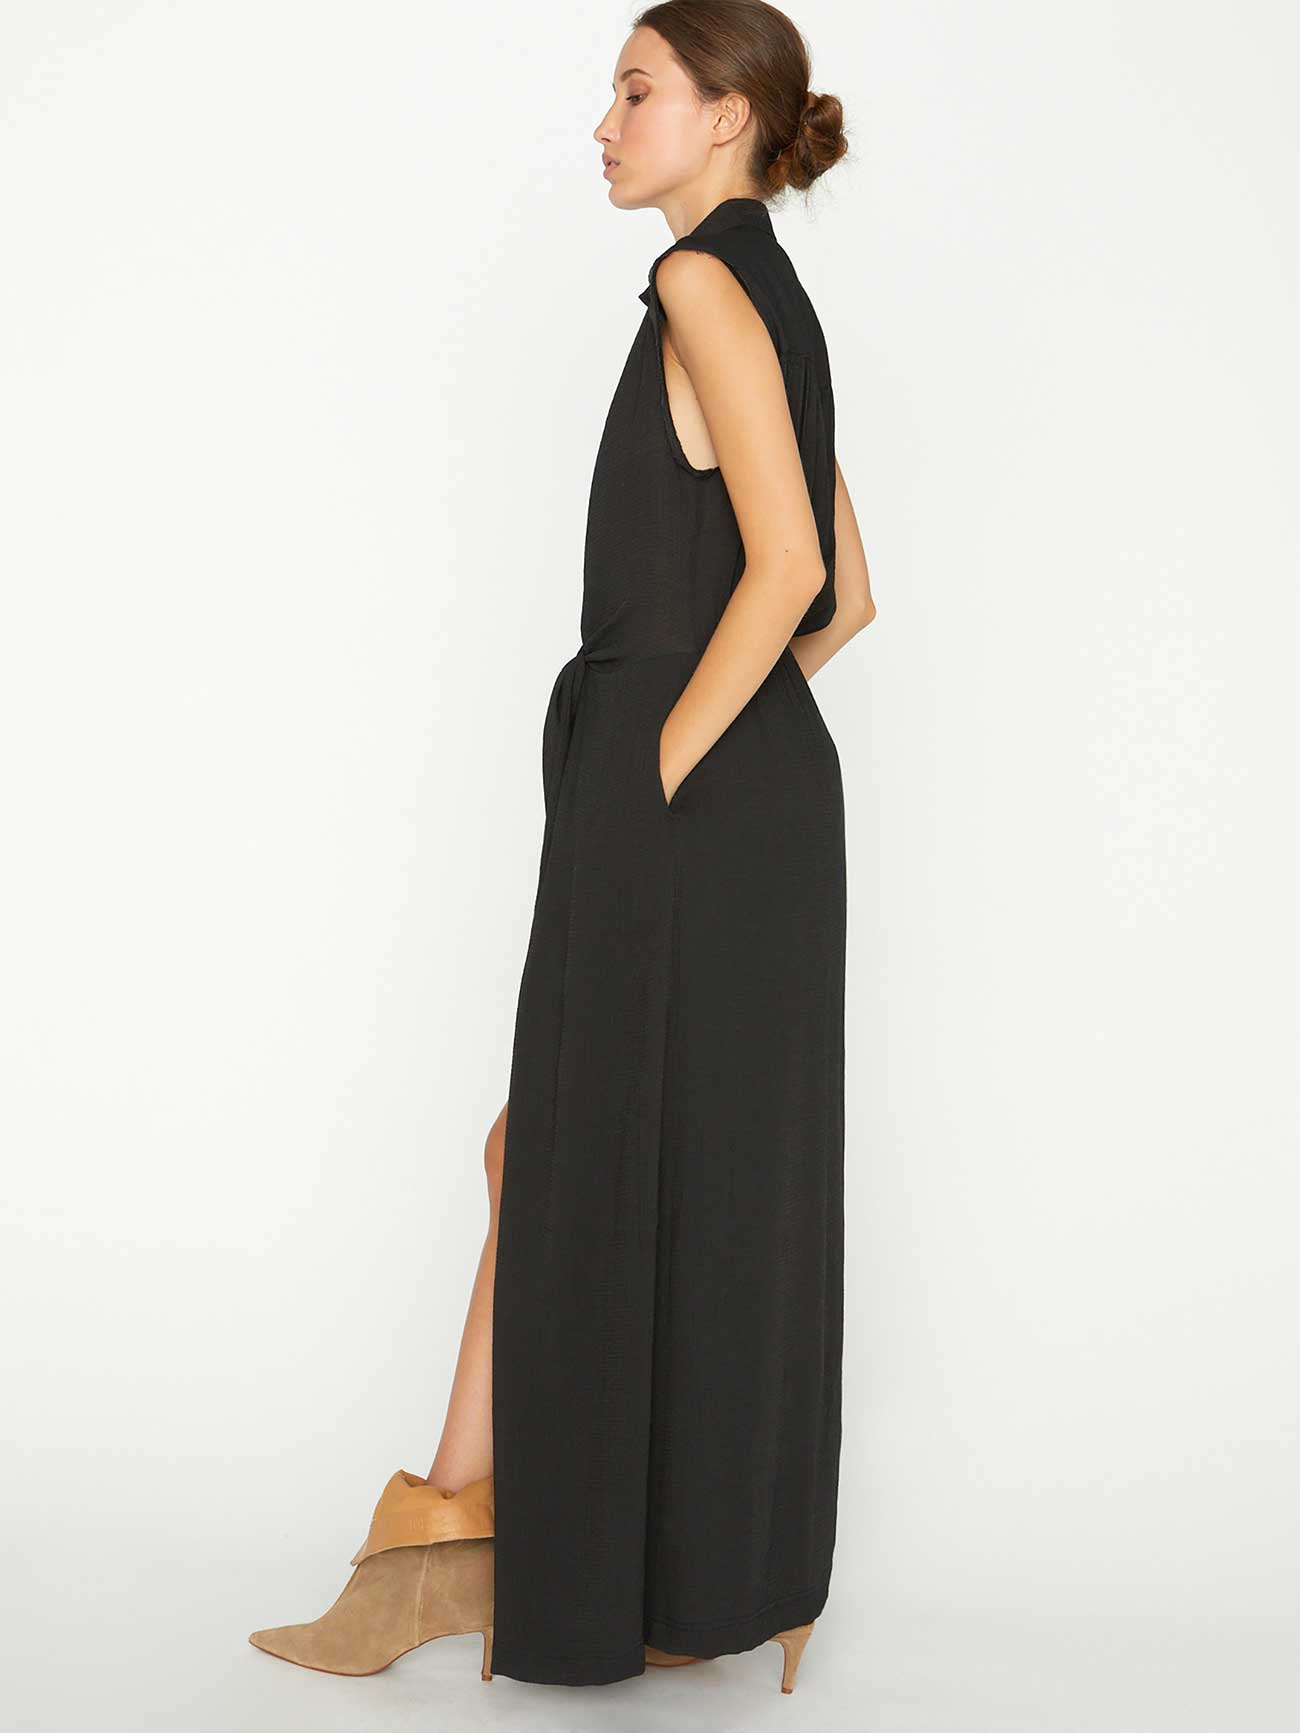 Photo of Woman in Black Sleeveless Dress Posing · Free Stock Photo